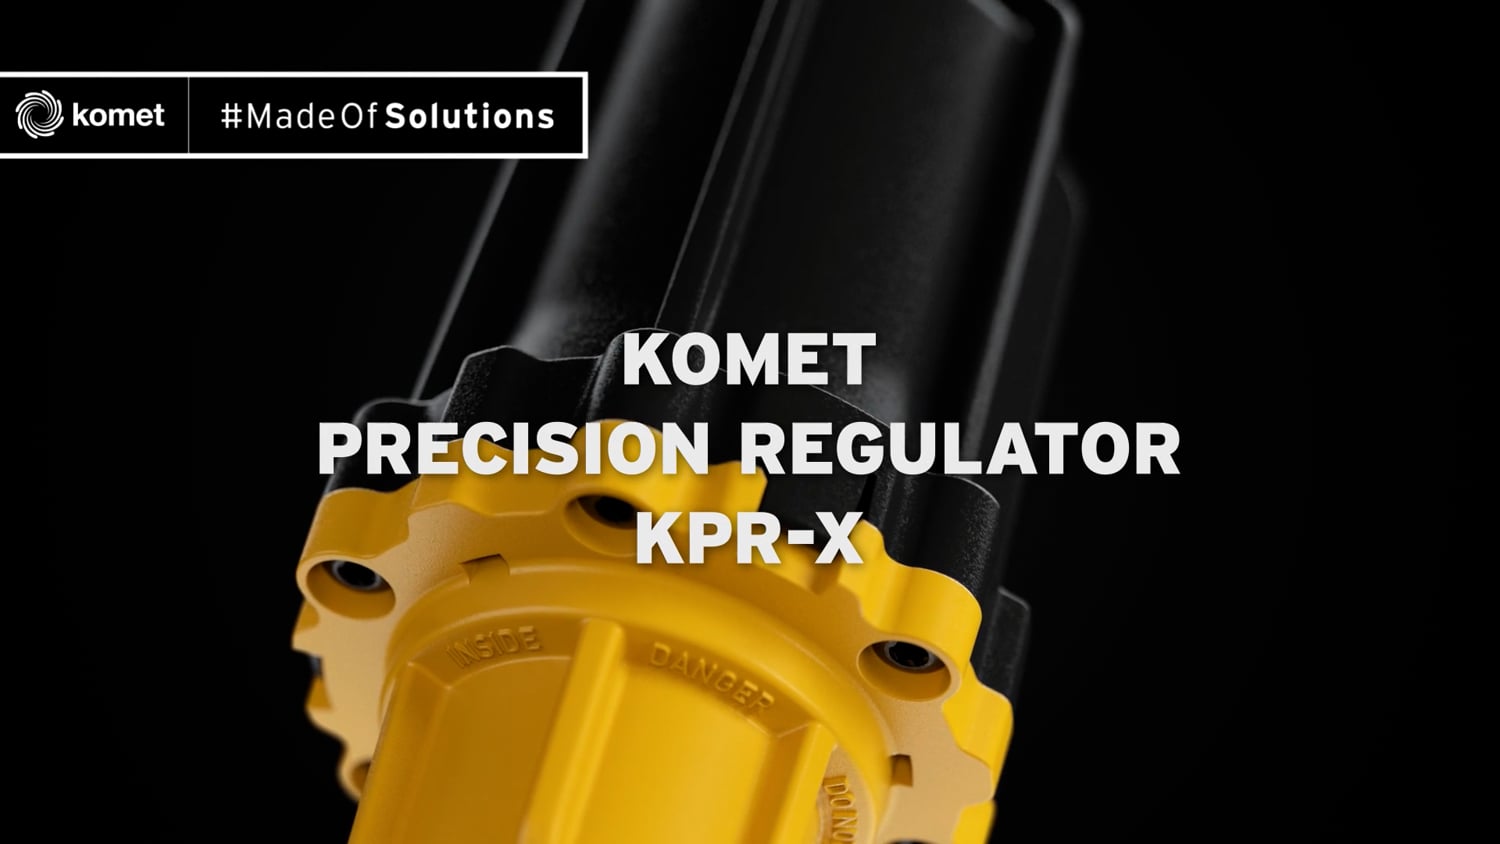 Inside the Komet Precision Regulator (KPR-X)